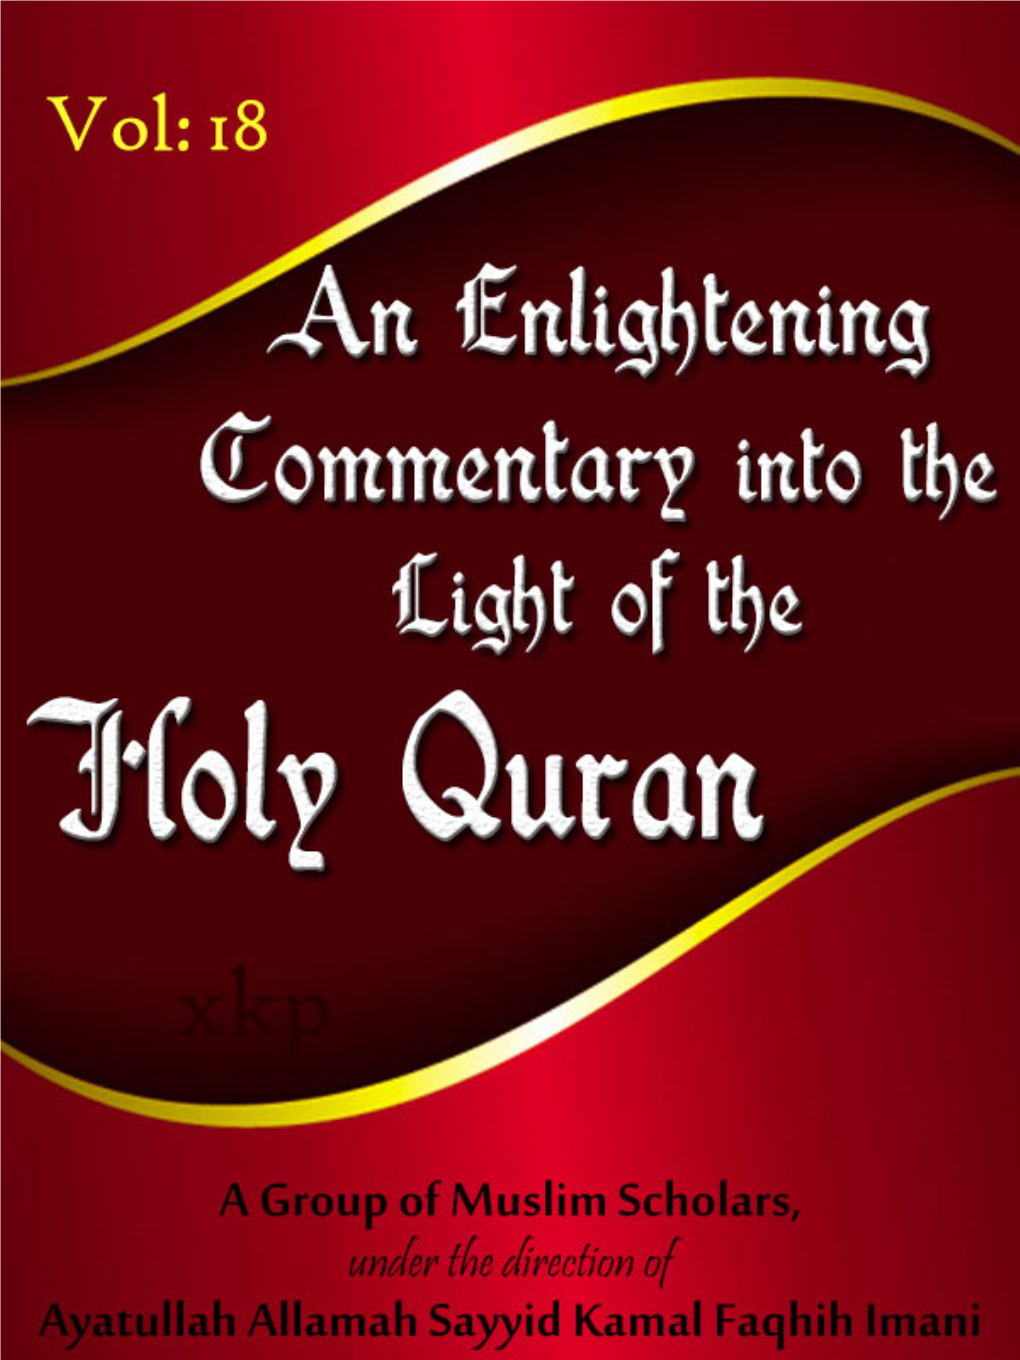 An Enlightening Commentary Into the Light of the Holy Quran Vol: 18 from Surah Al-Mujadalah (58) to Surah Al-Qiyamah (75) Introduction